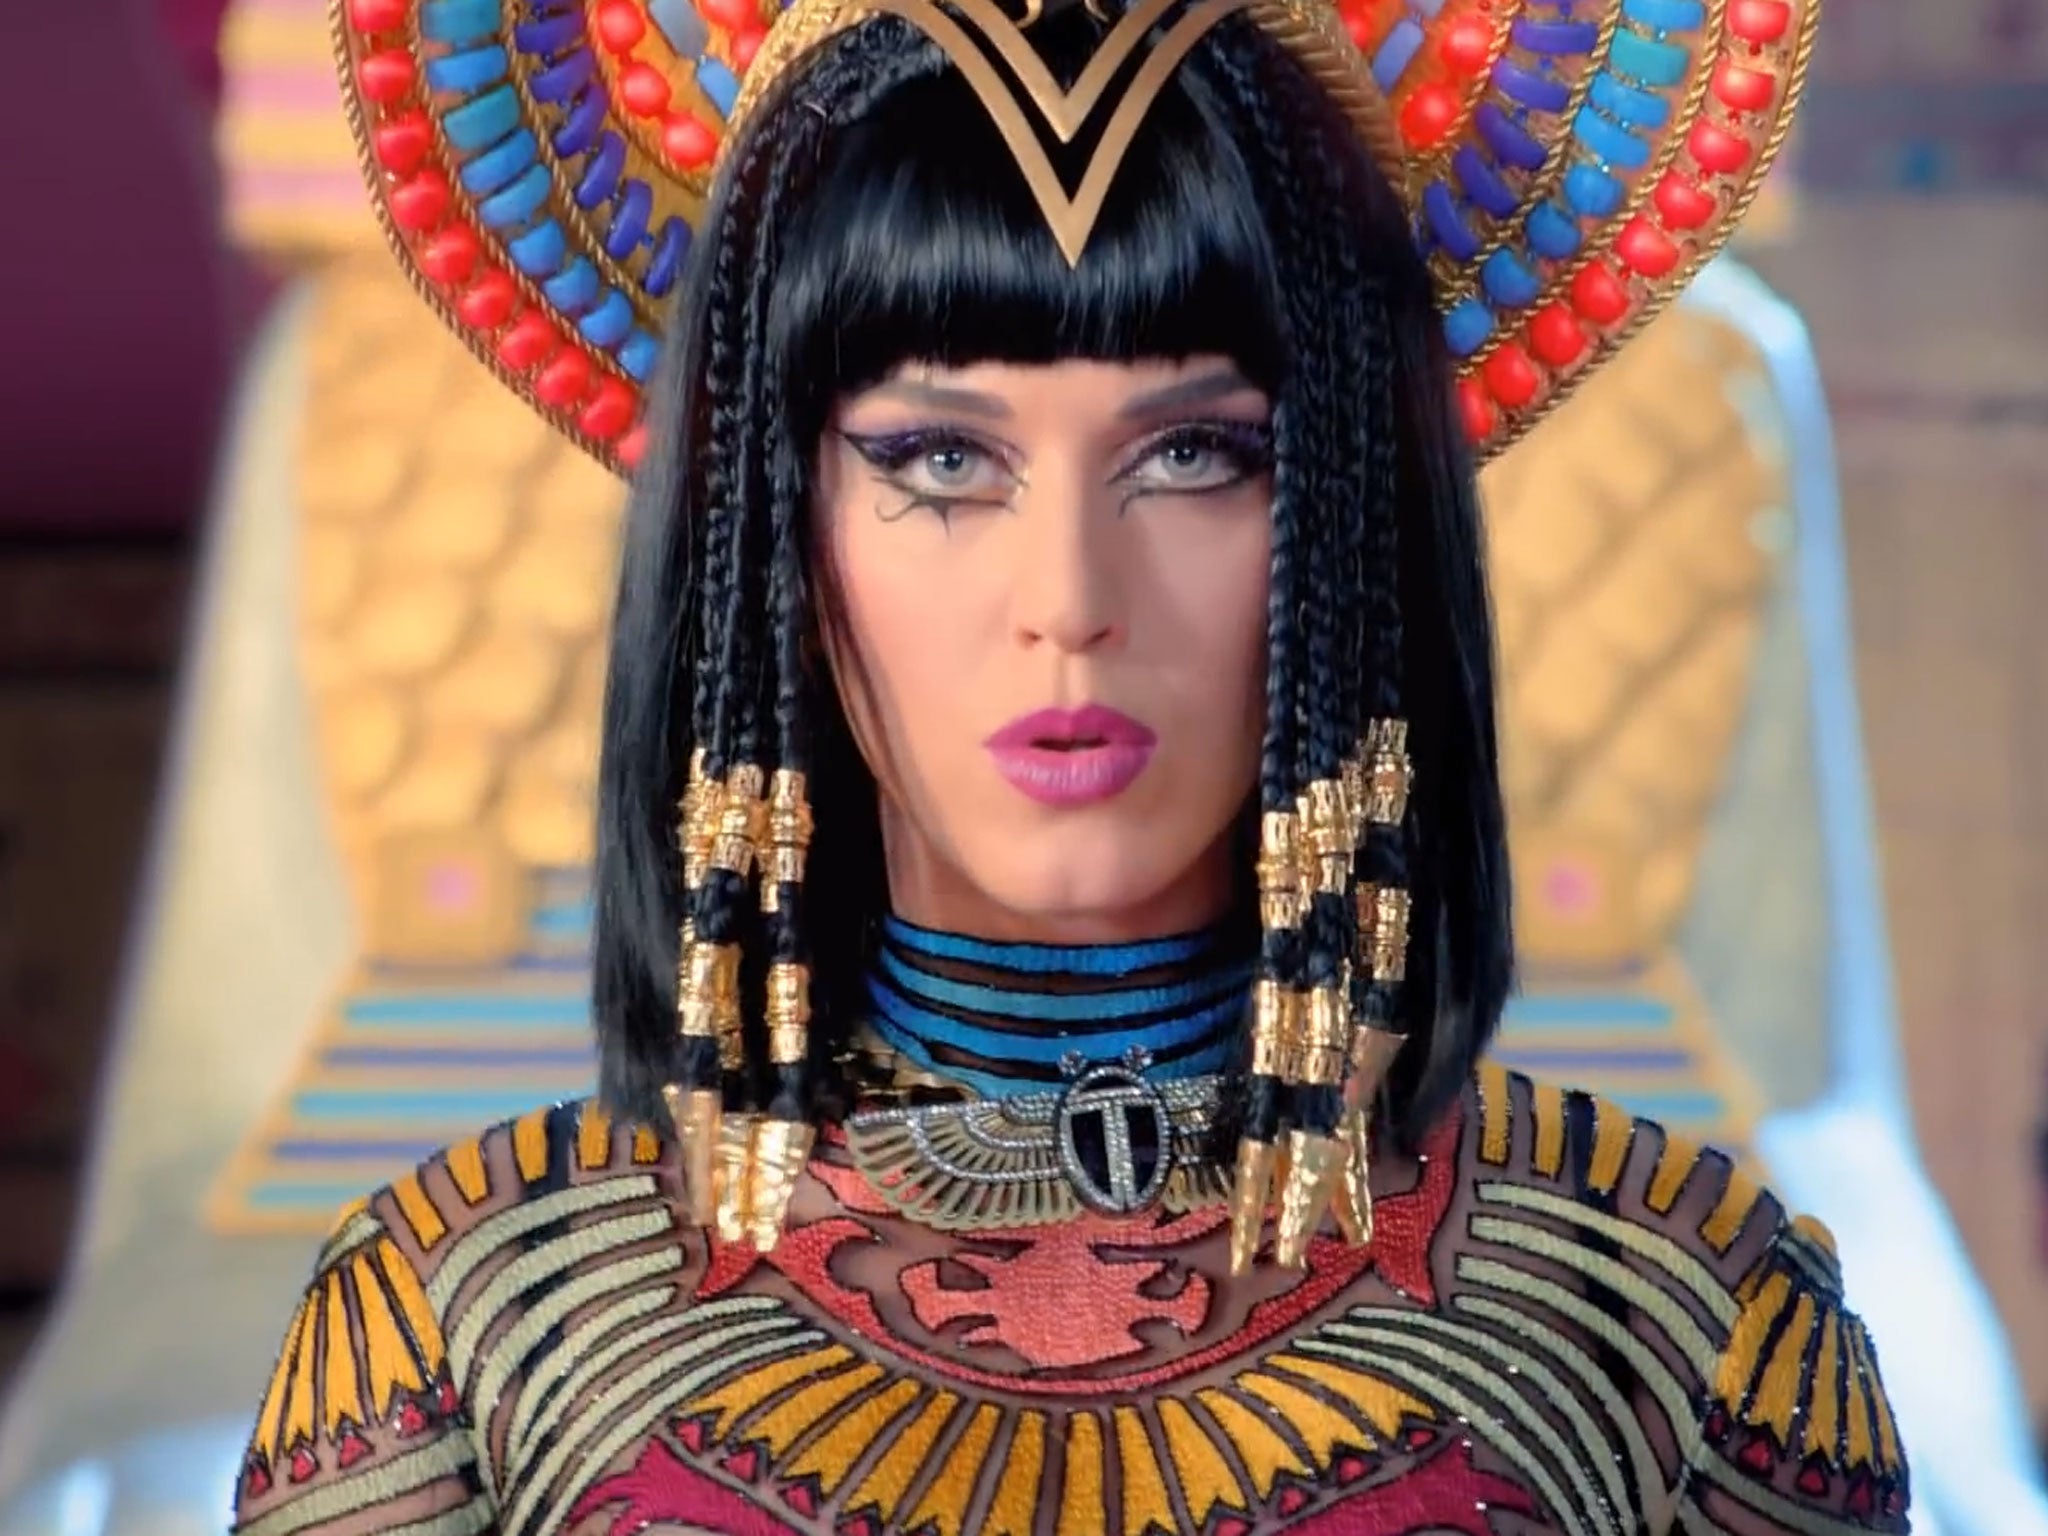 Katy Perry Dark Horse video portrays blasphemy - BBC News